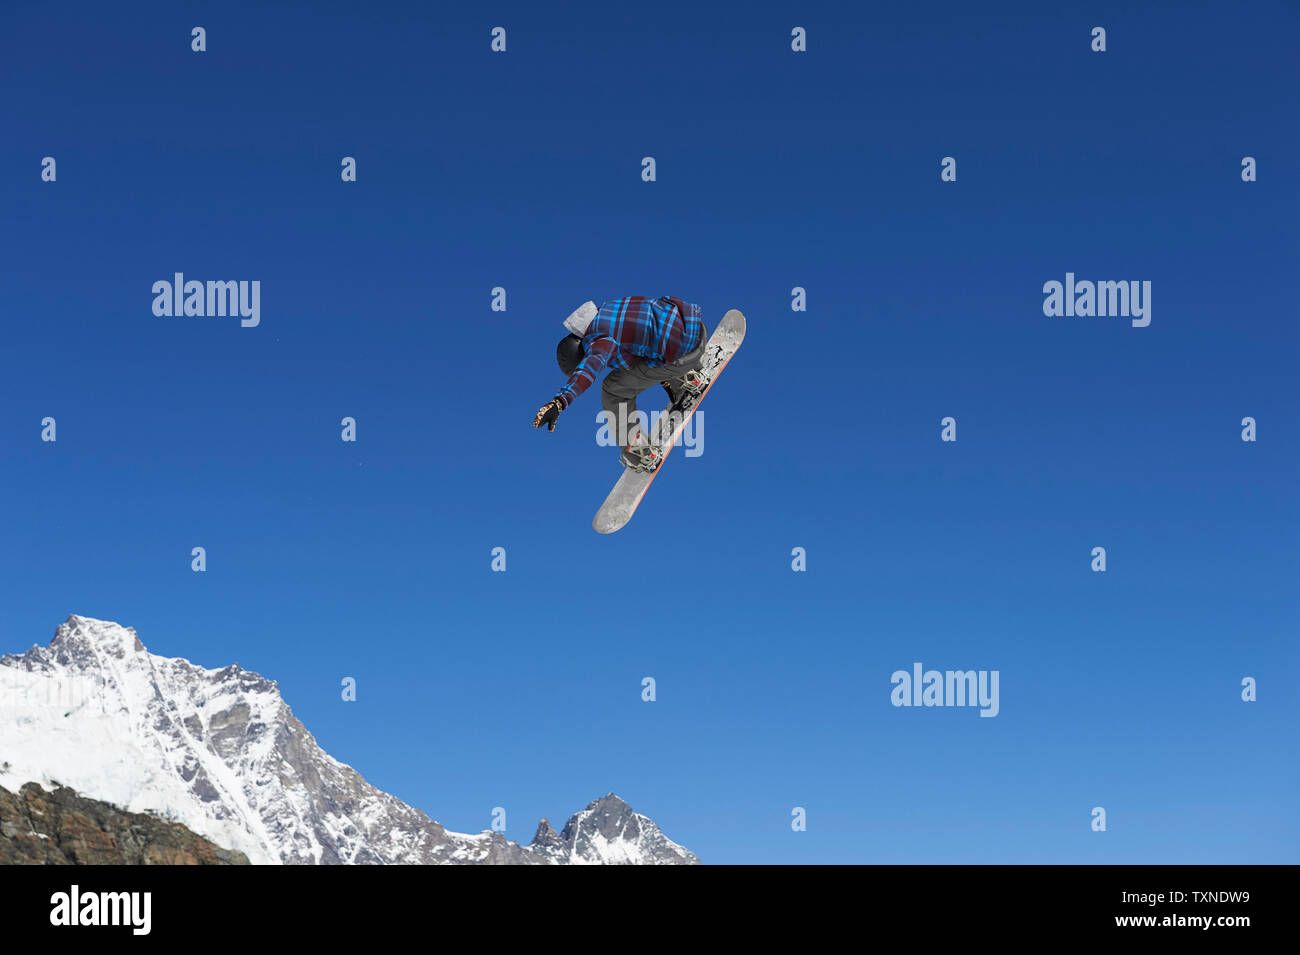 Skier in midair, Saas-Fee, Valais, Switzerland Stock Photo